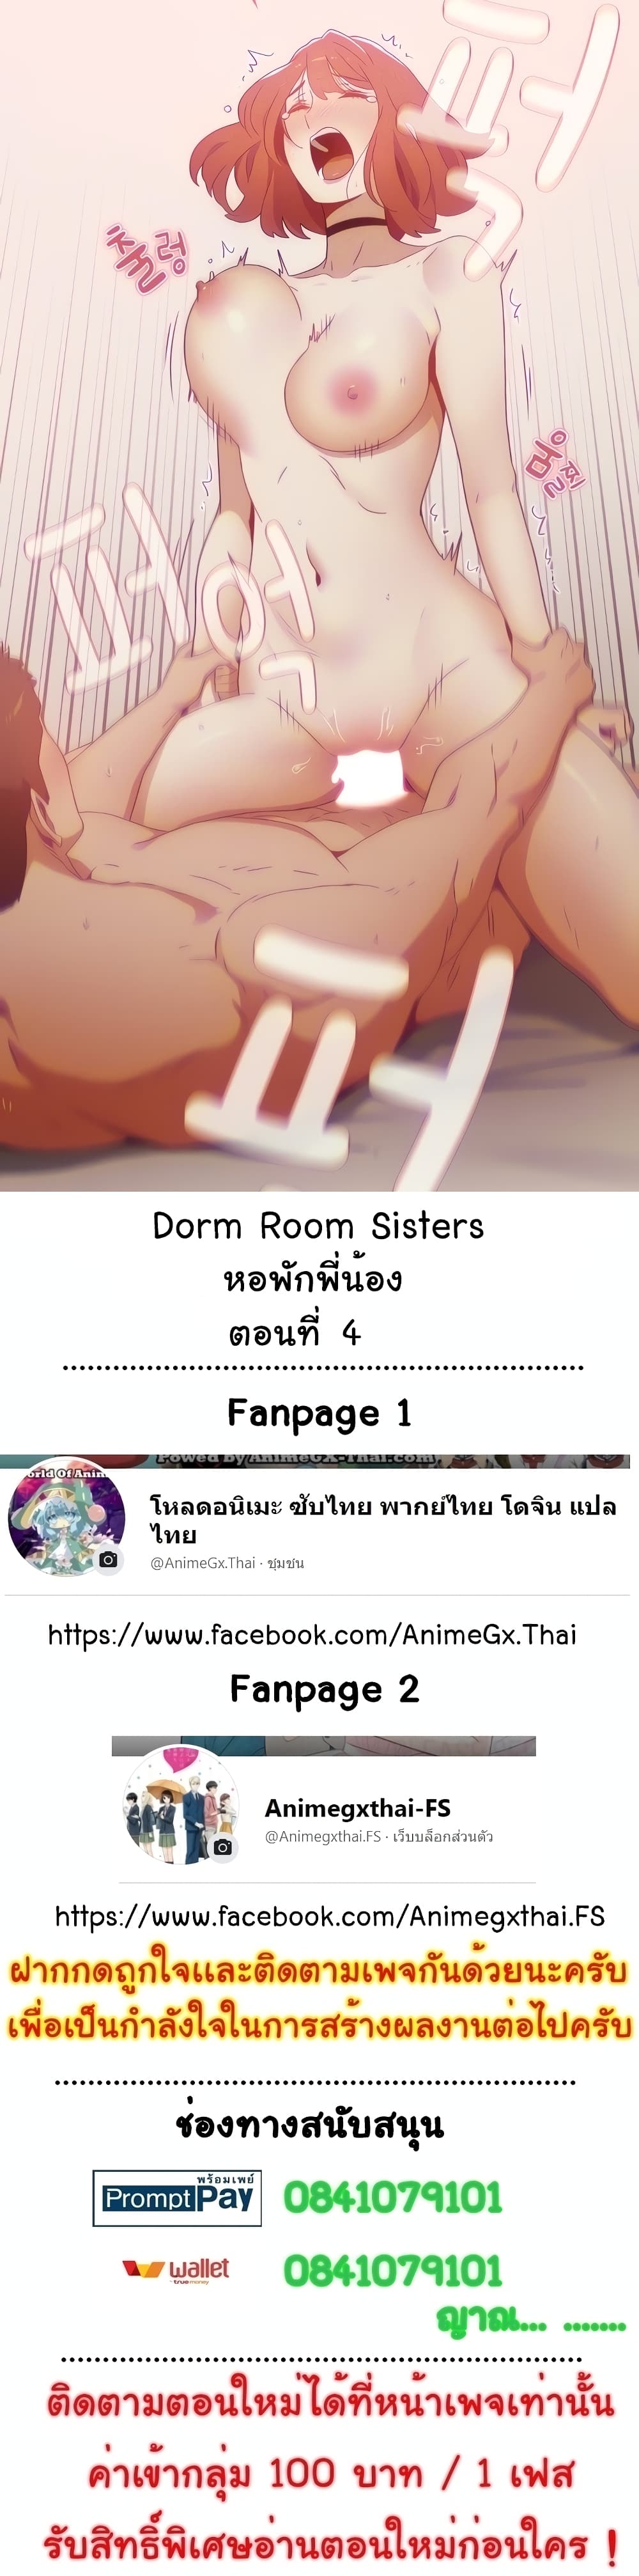 Dorm Room Sisters 4 01